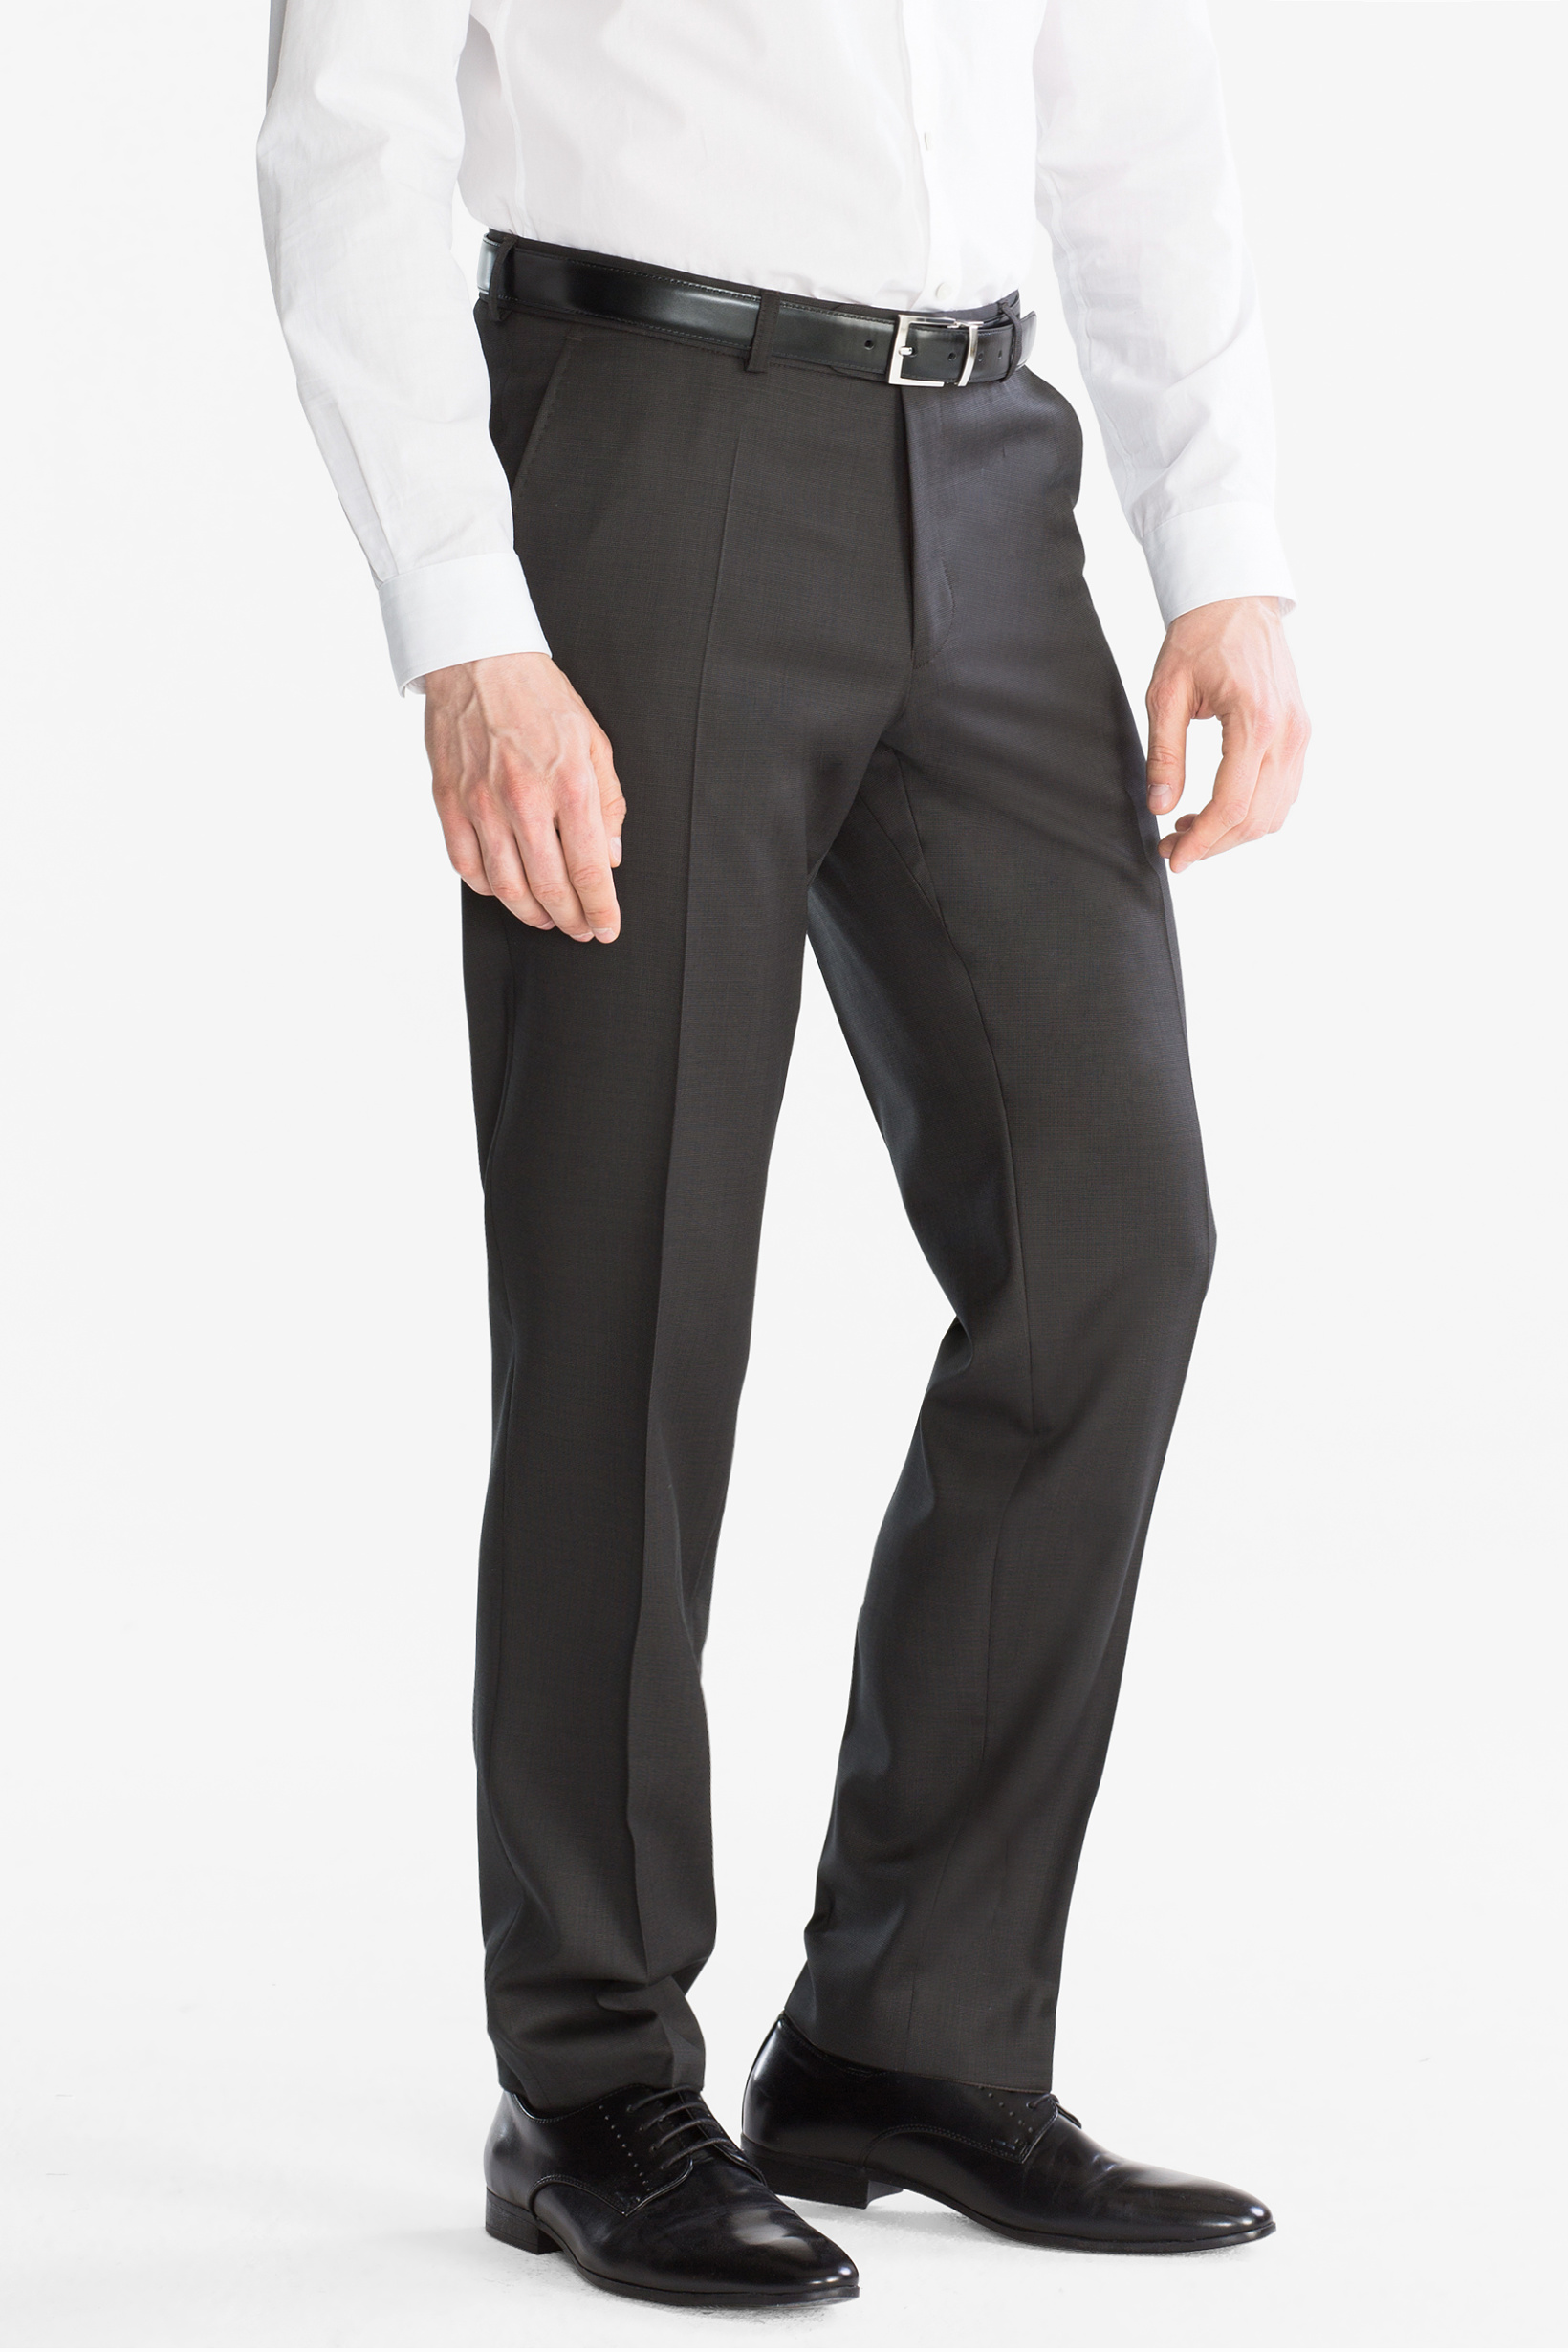 Westbury Split suit–broek